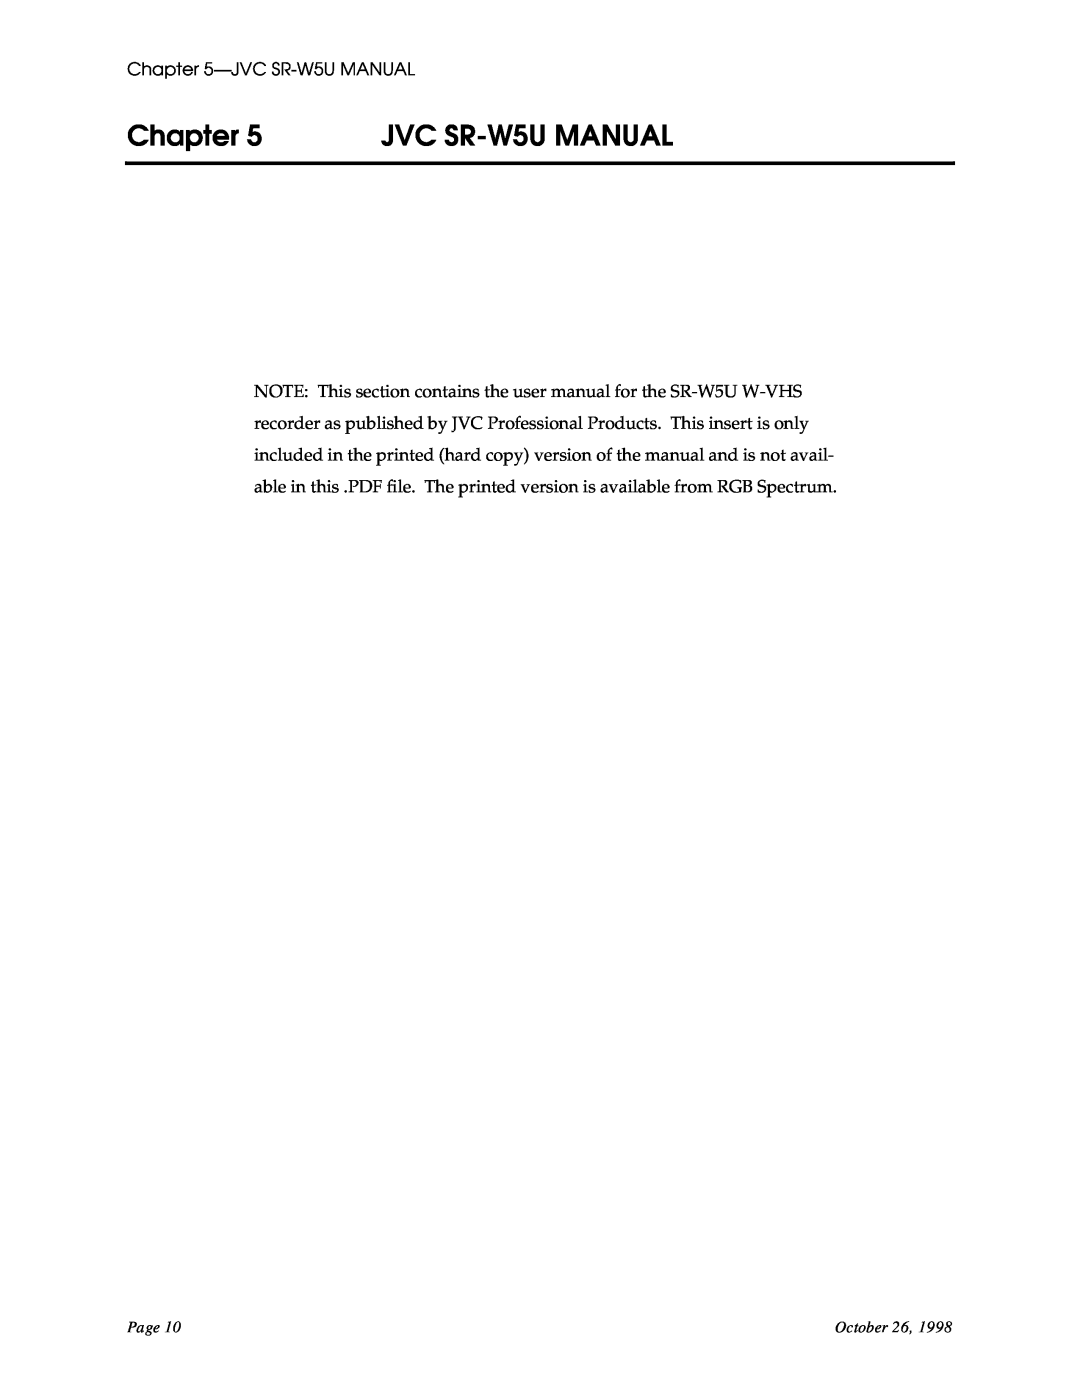 RGB Spectrum HDR 203HD user manual JVC SR-W5U MANUAL, Chapter, Page, October 26 